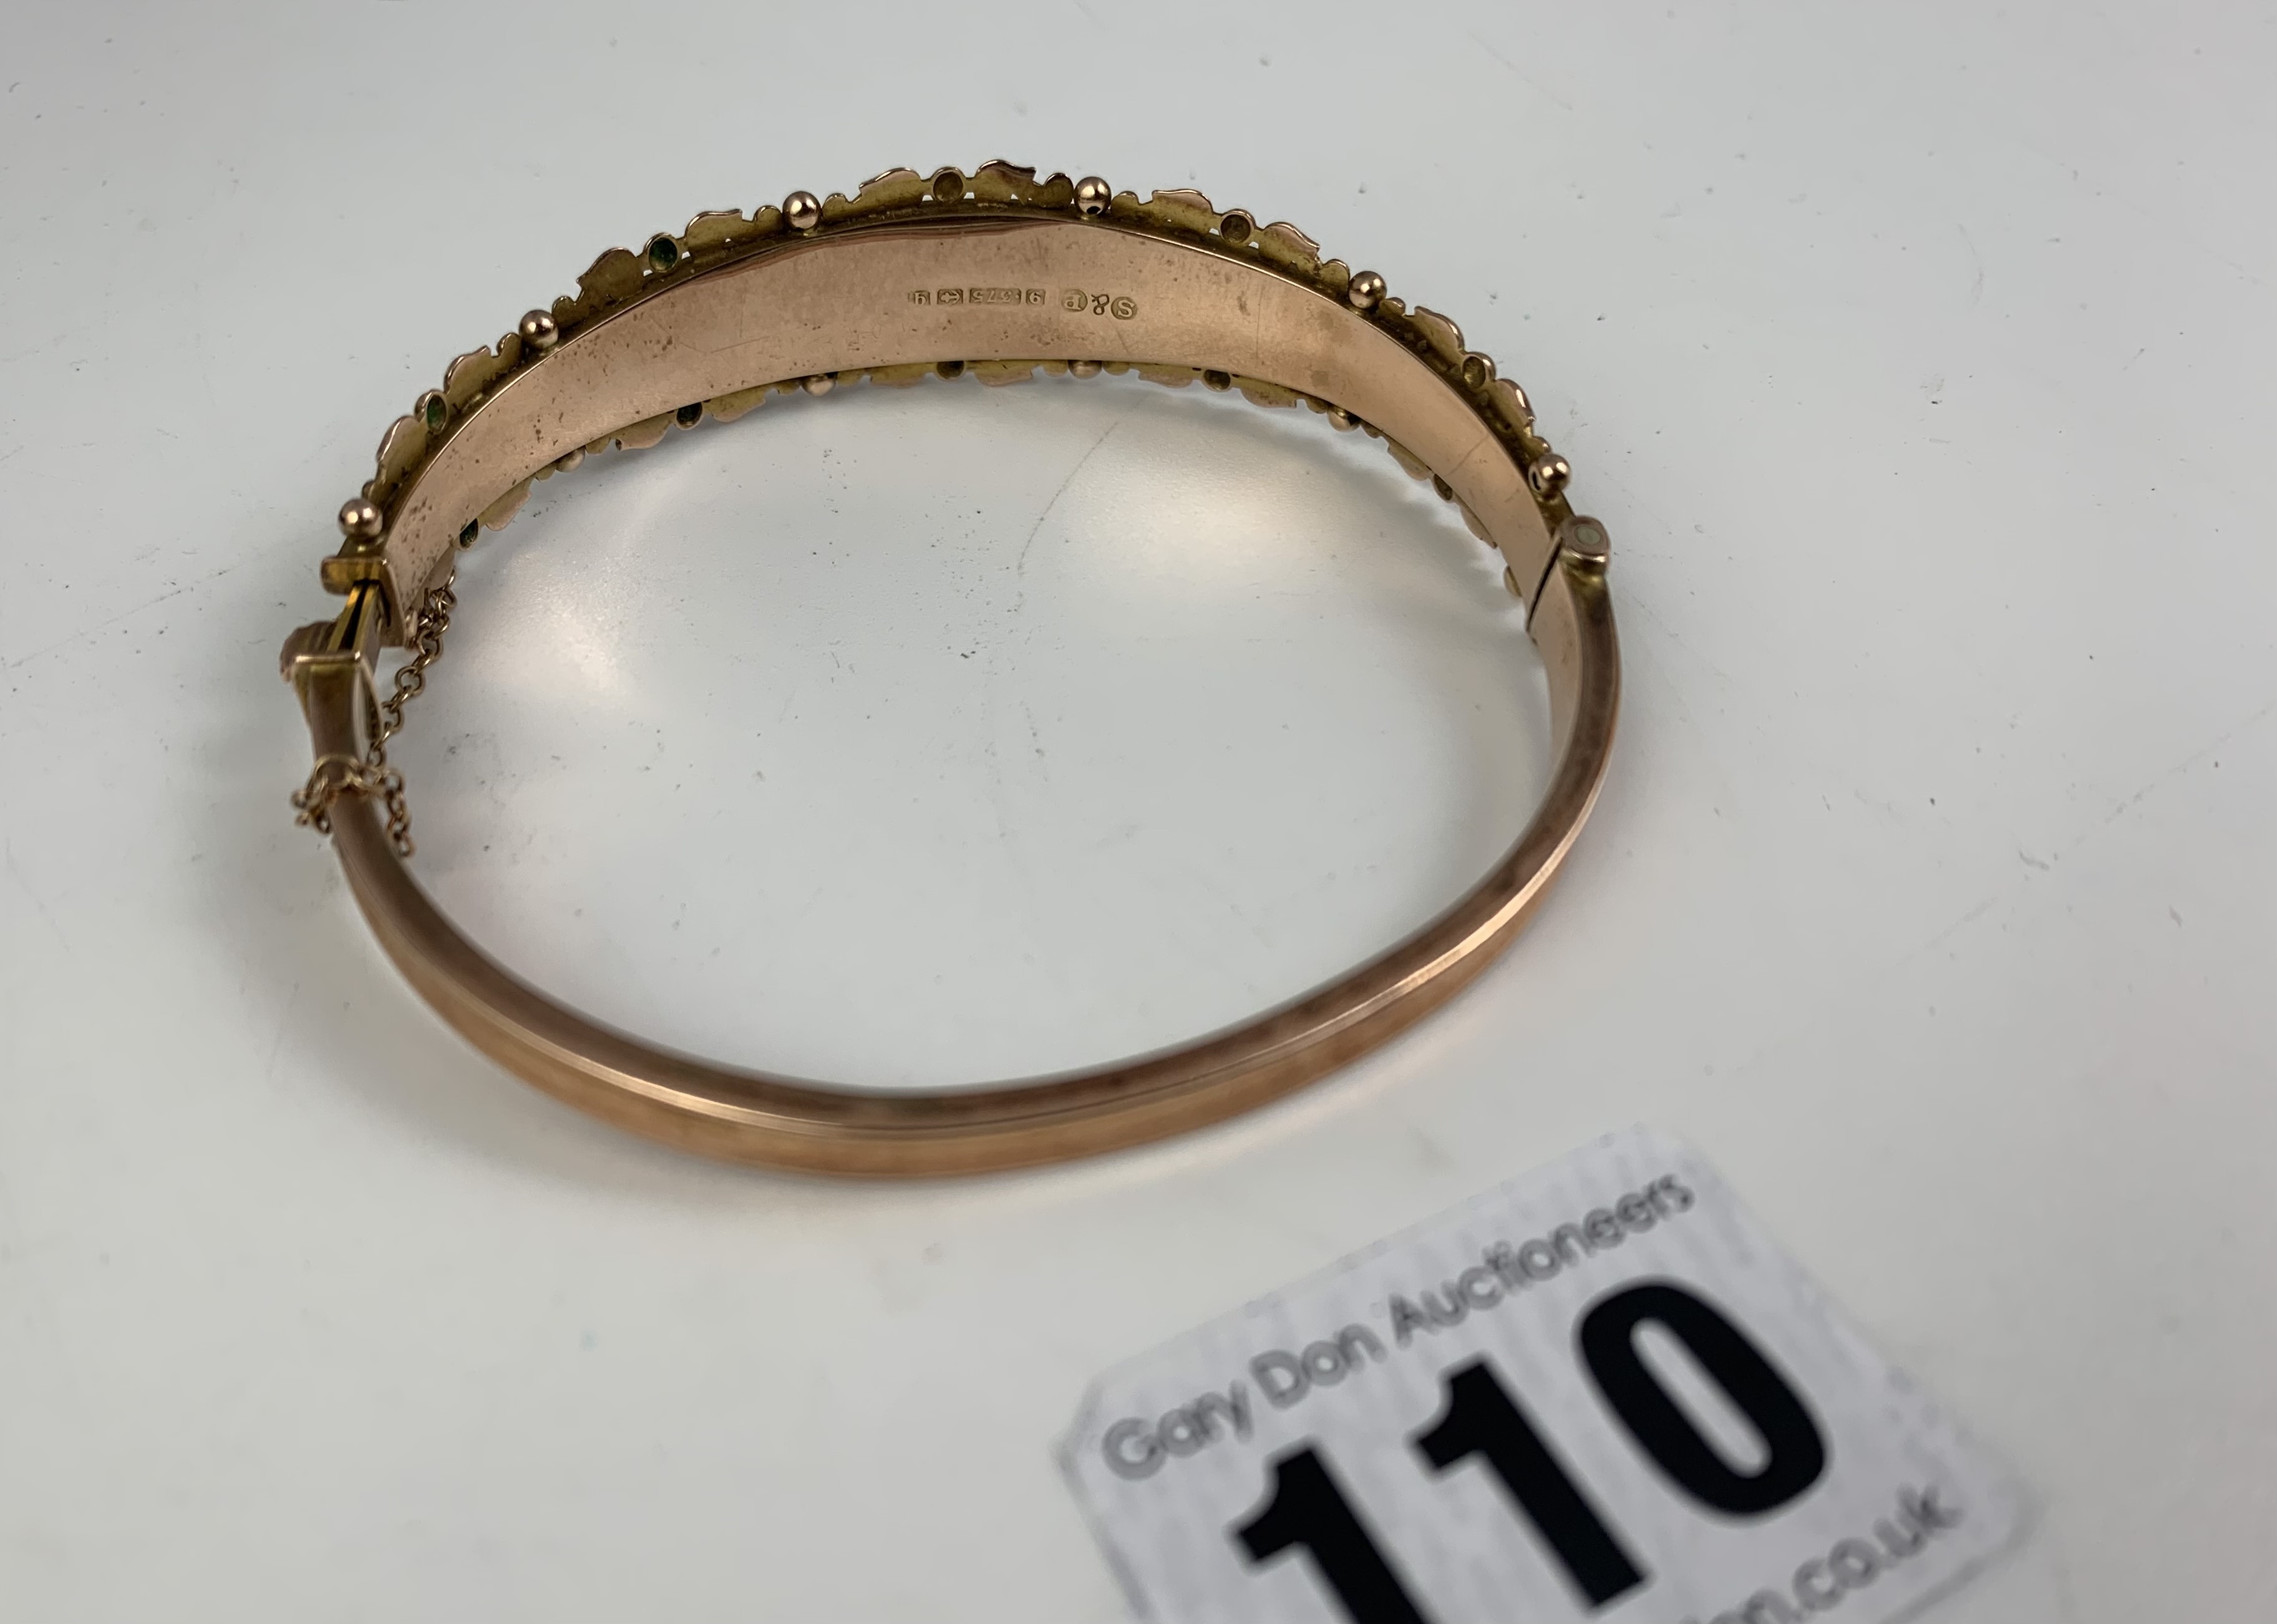 Boxed 9k gold bangle, 8” circumference, w: 9.3 gms - Image 5 of 9